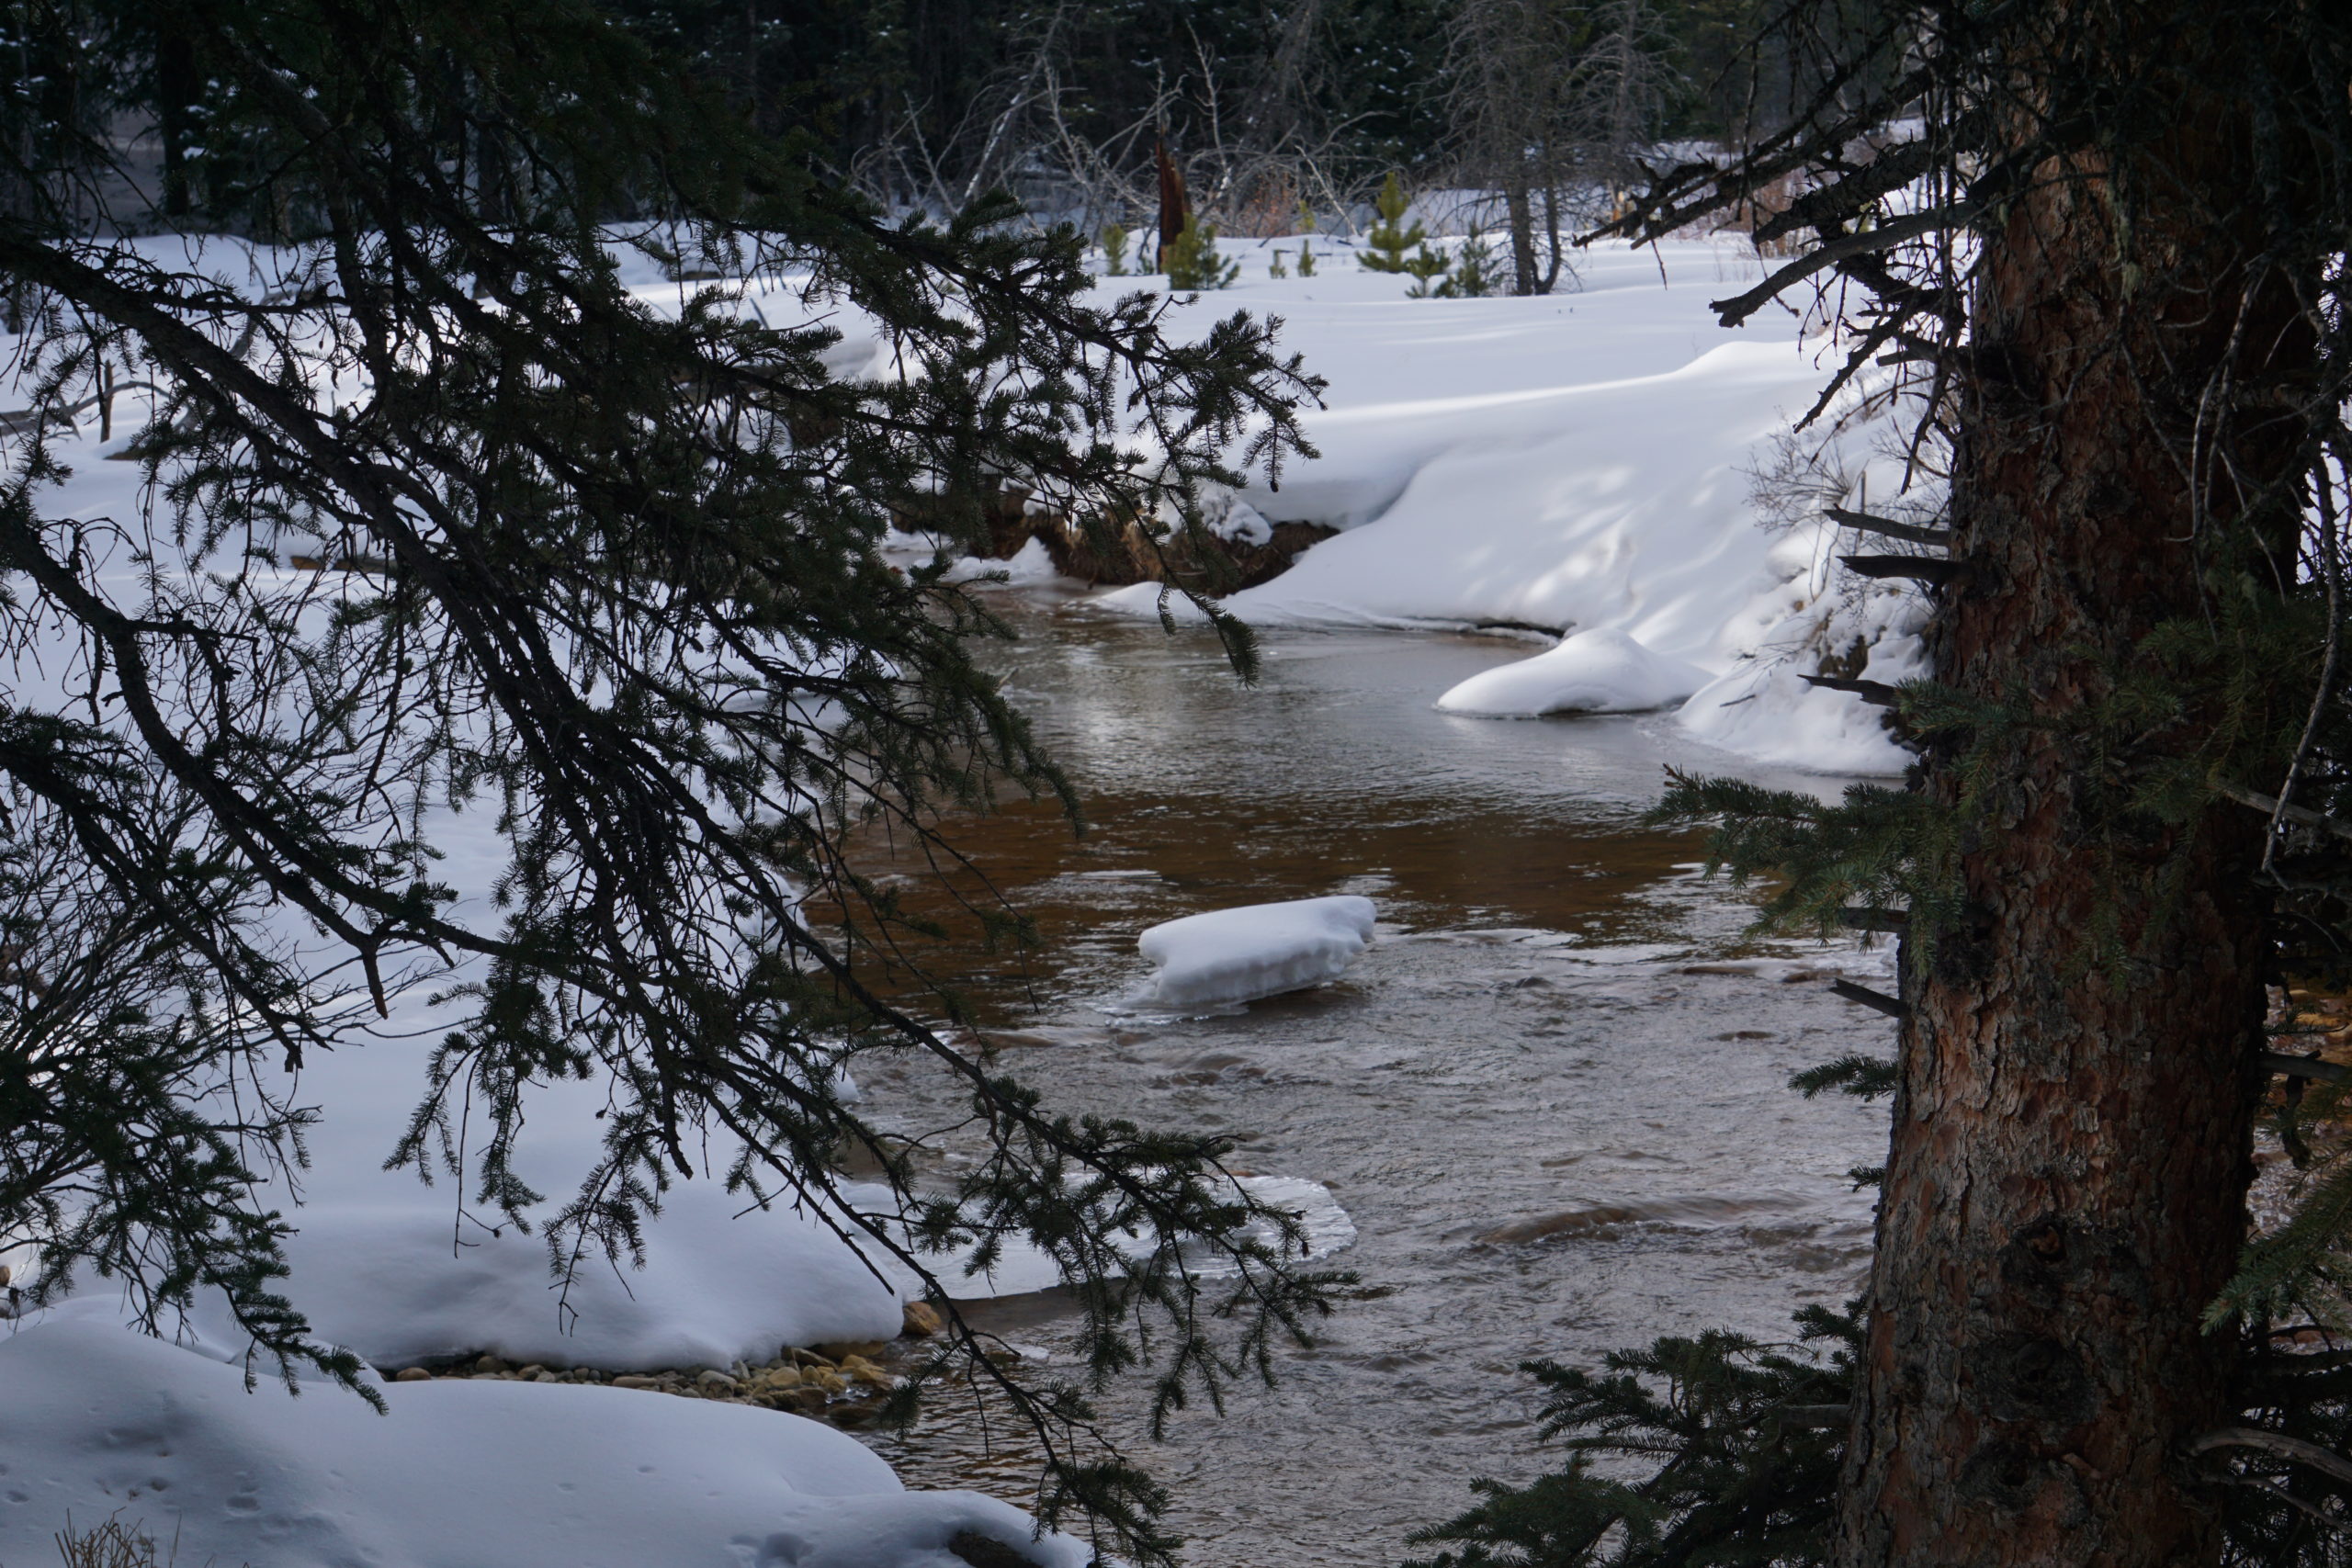 Water flows through a snow field.